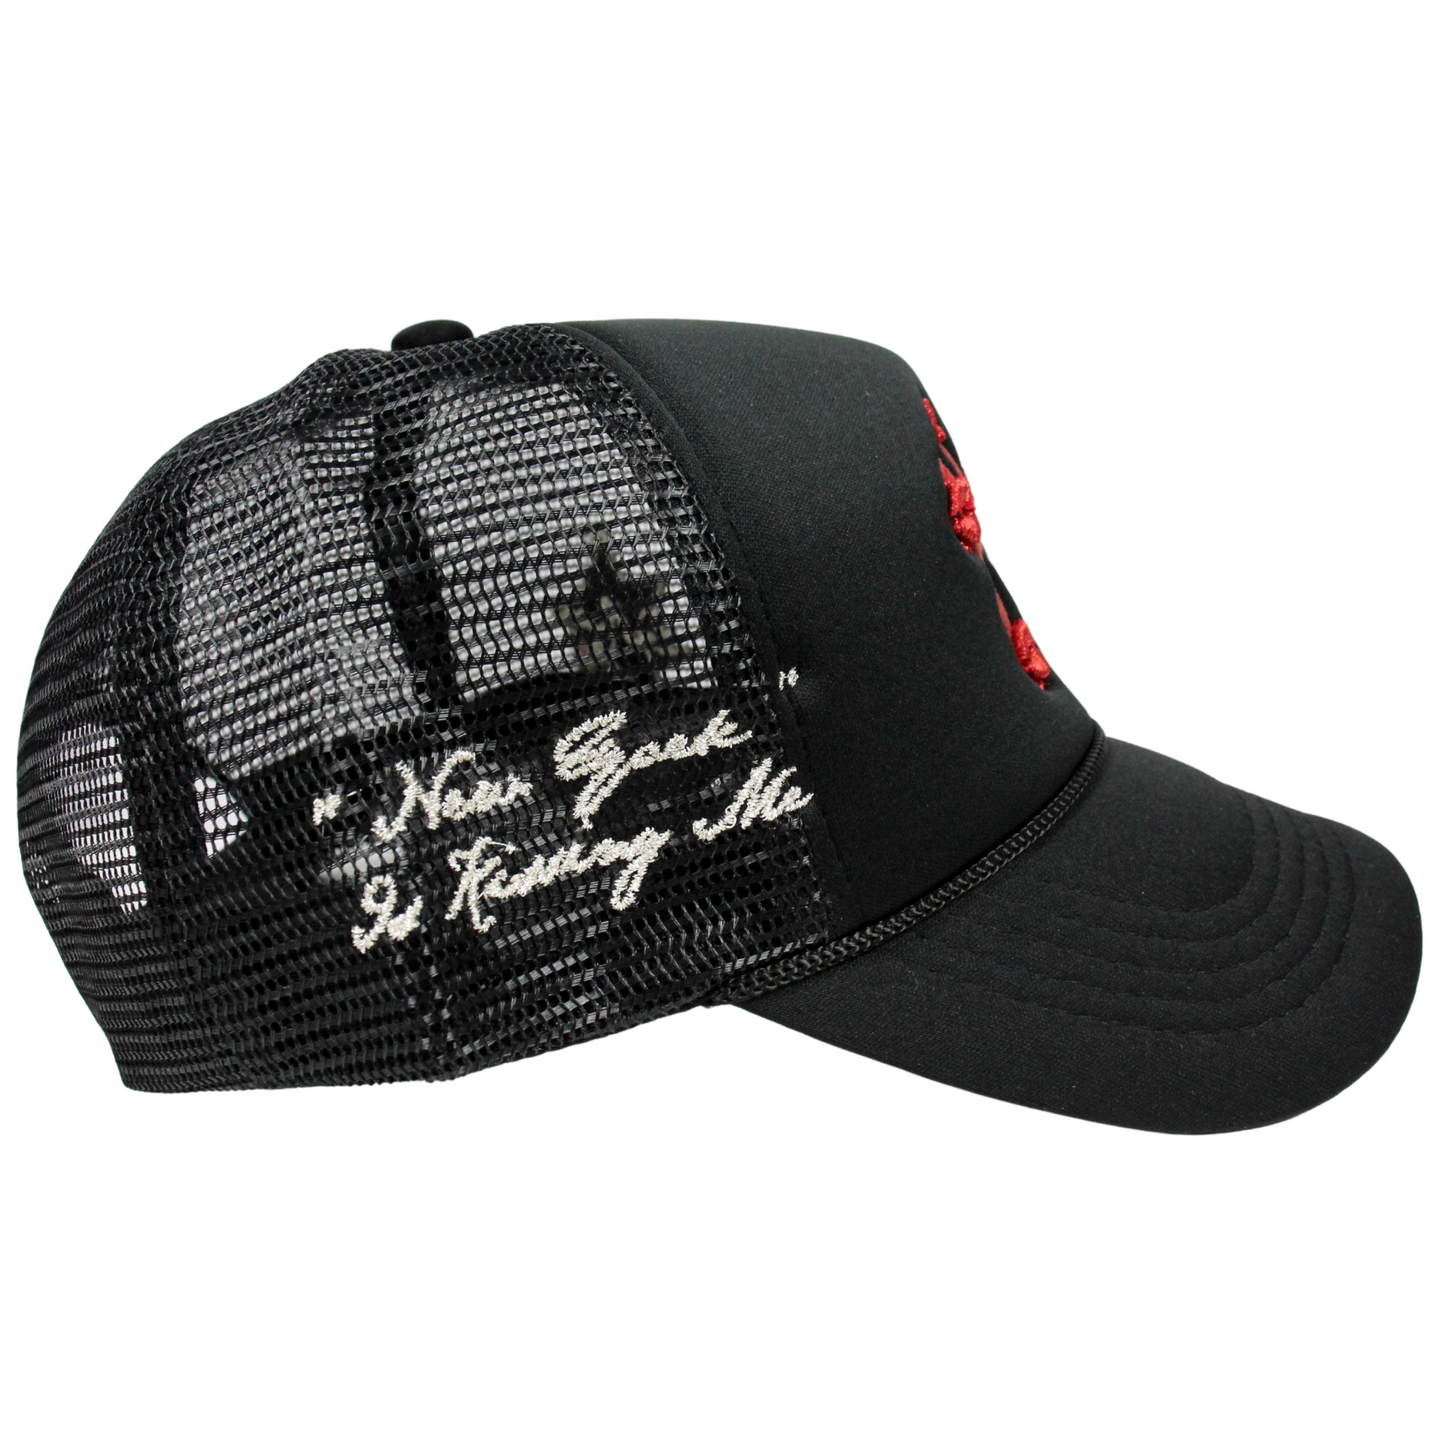 La Ropa NY Trucker Hat (Black/Red)